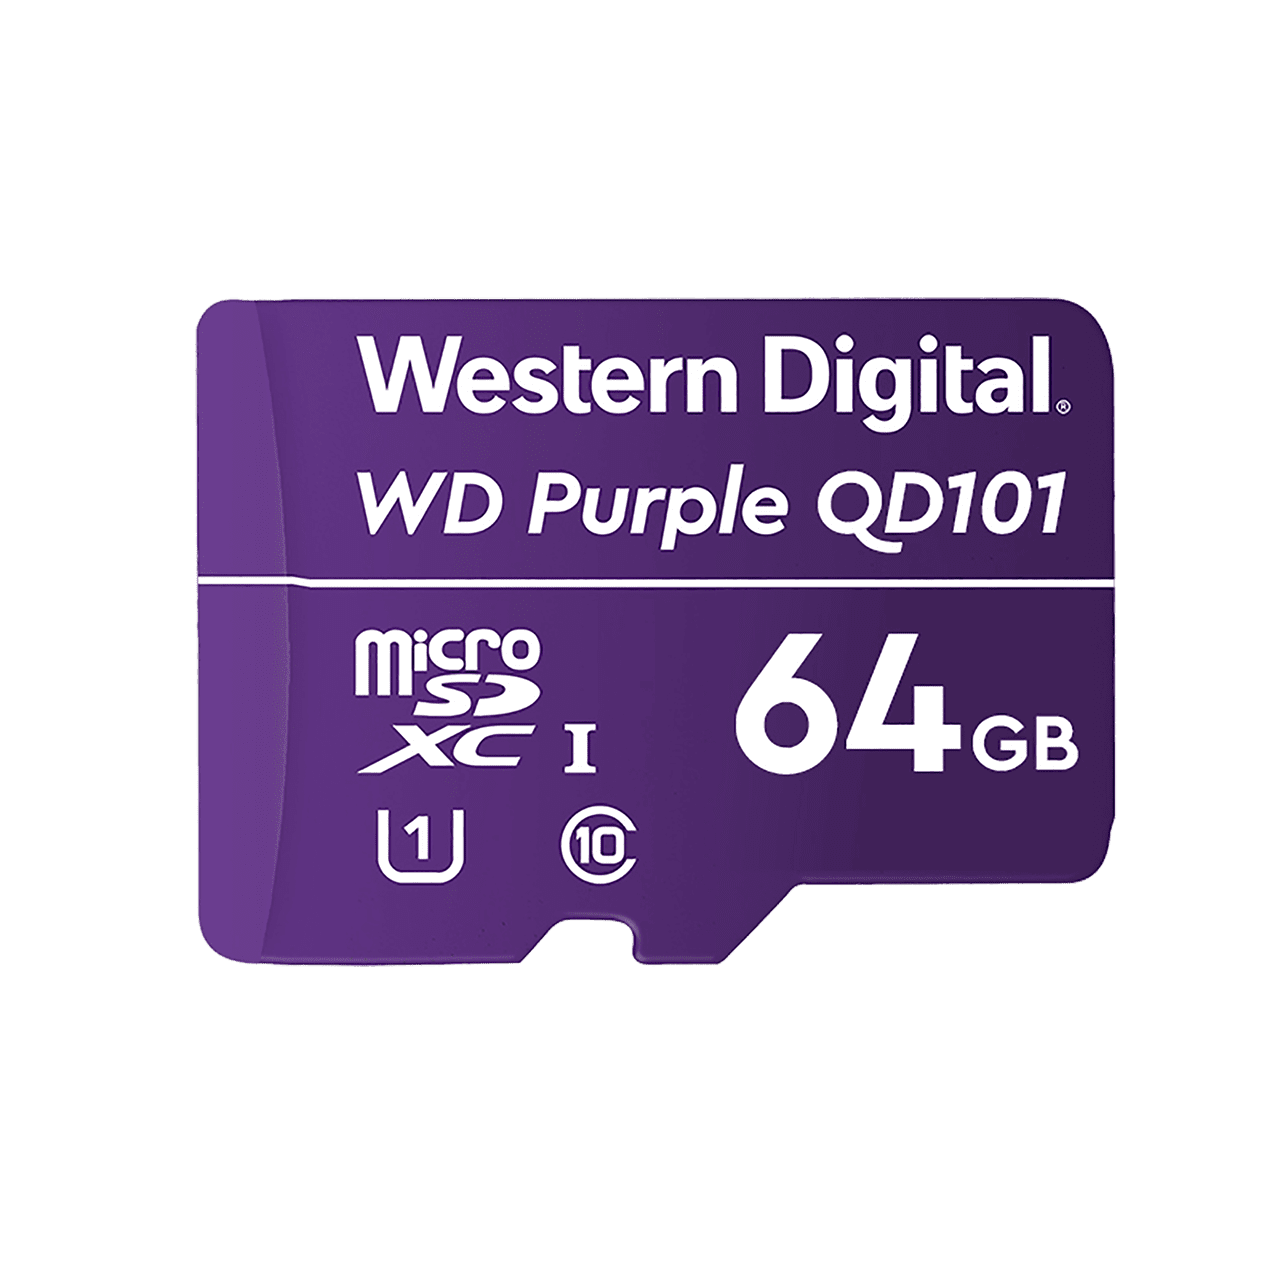 WD Western Digital Purple 64GB microSD Surveillance SC QD101